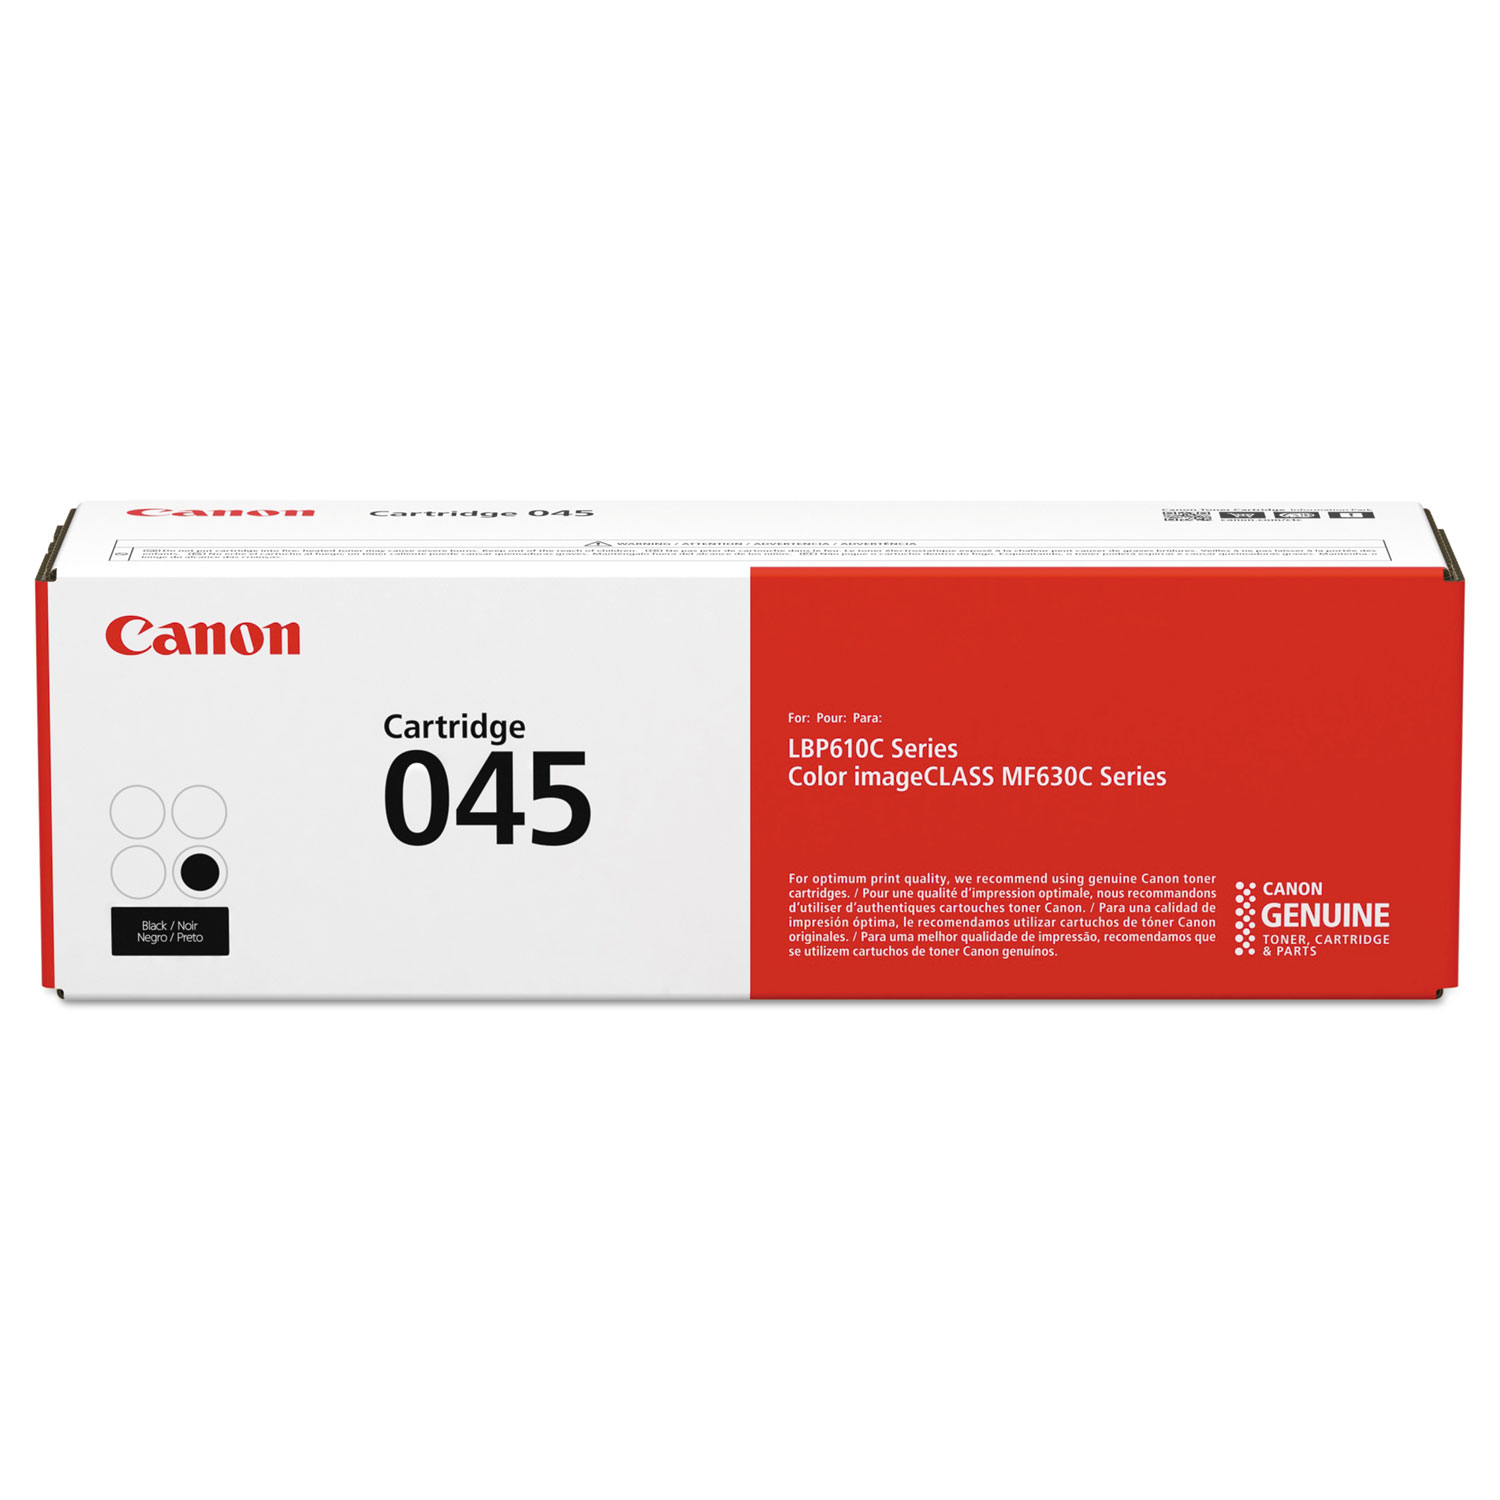  Canon 1242C001 1242C001 (045) Toner, 1400 Page-Yield, Black (CNM1242C001) 